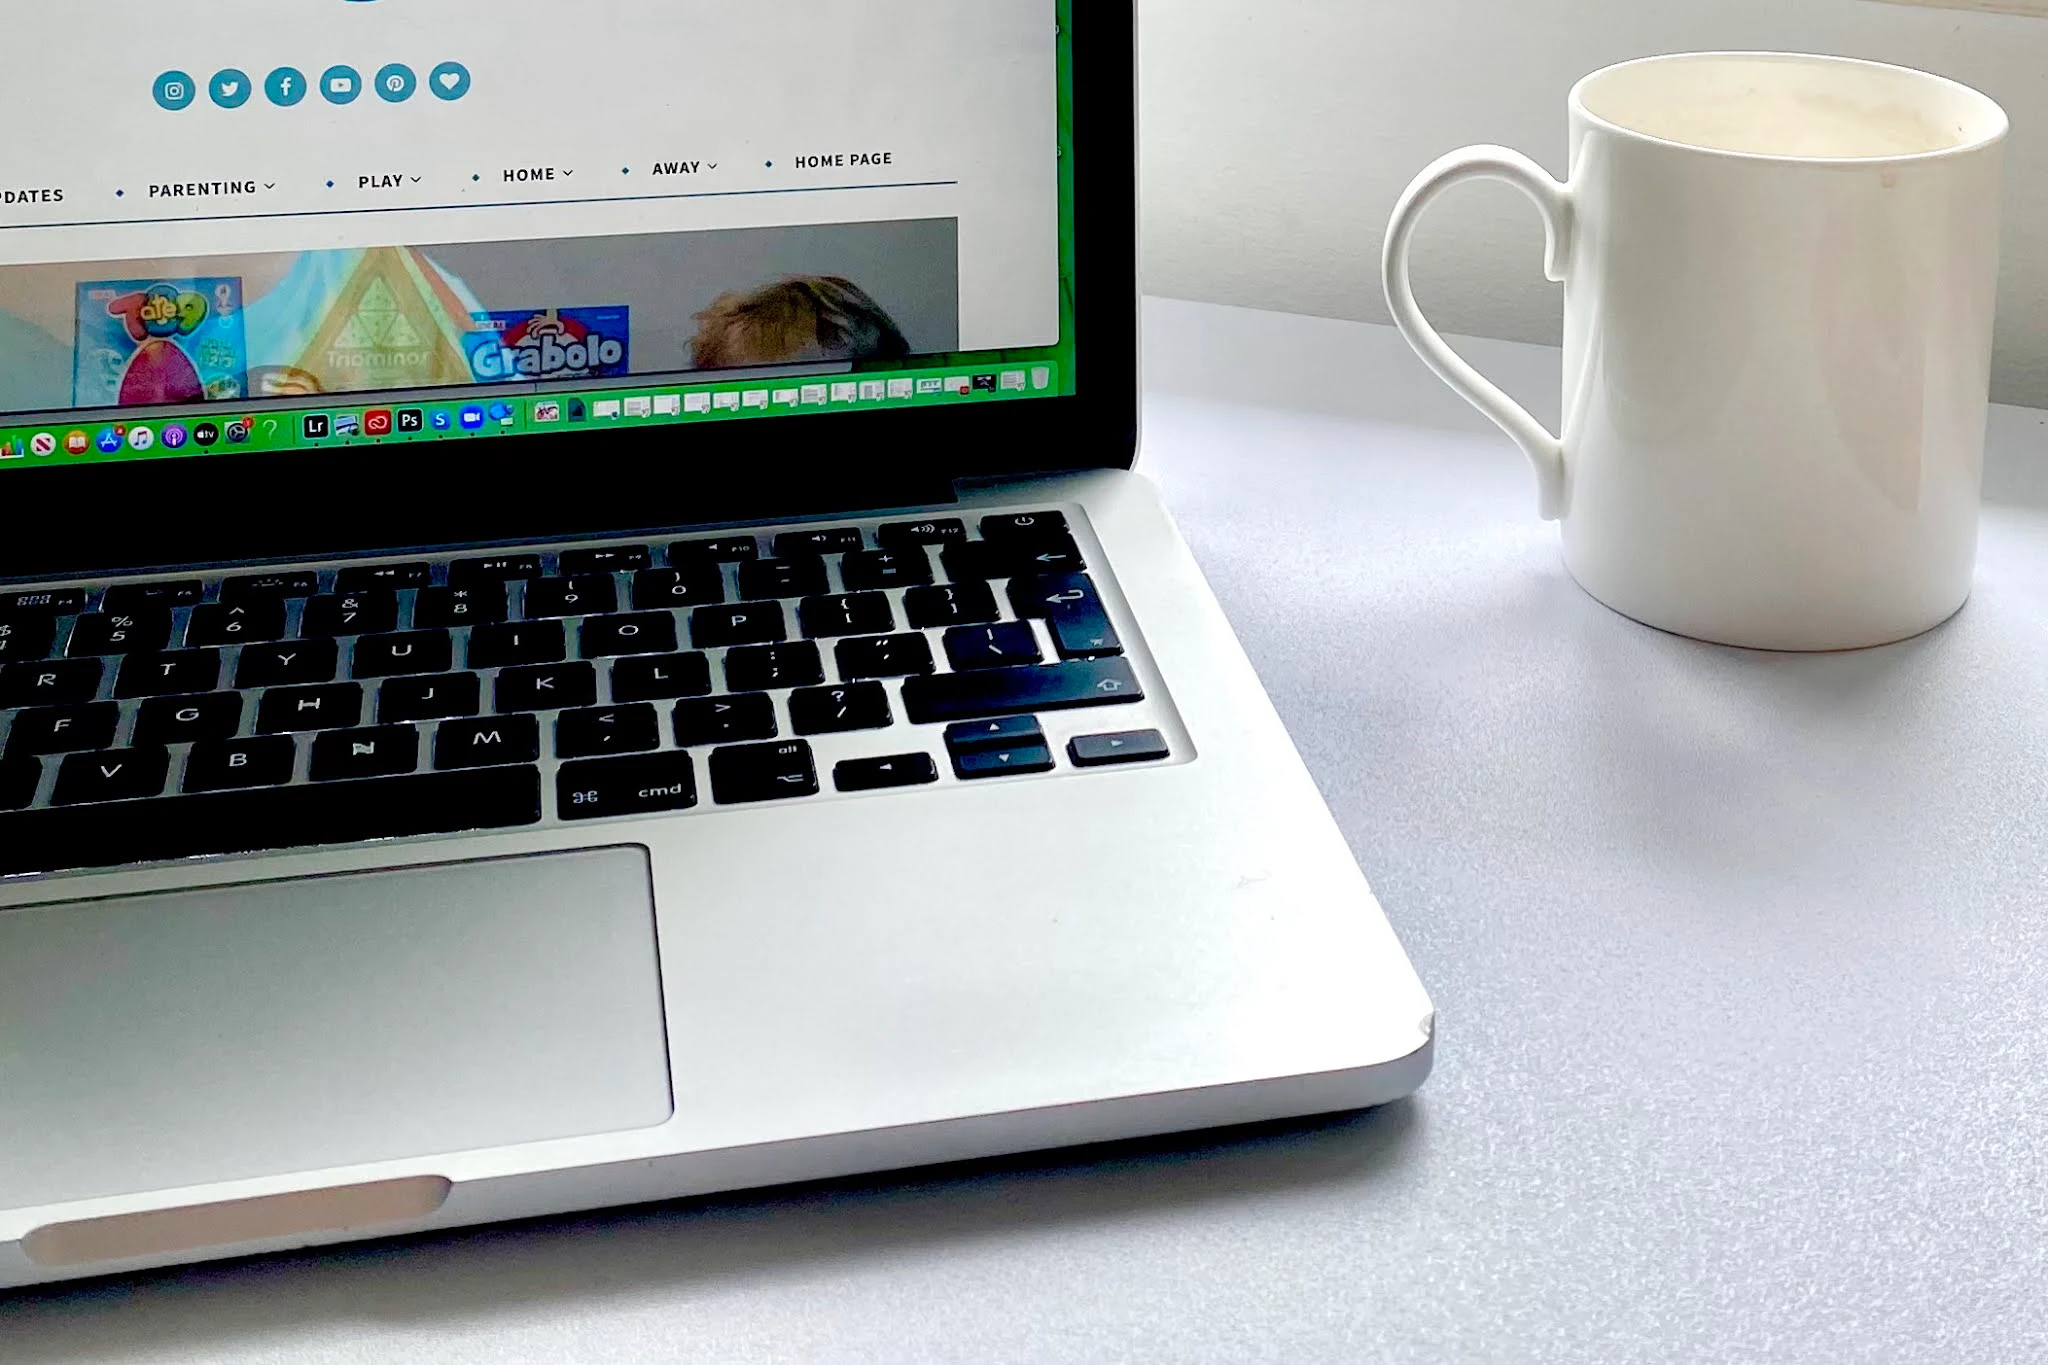 A website and an empty mug